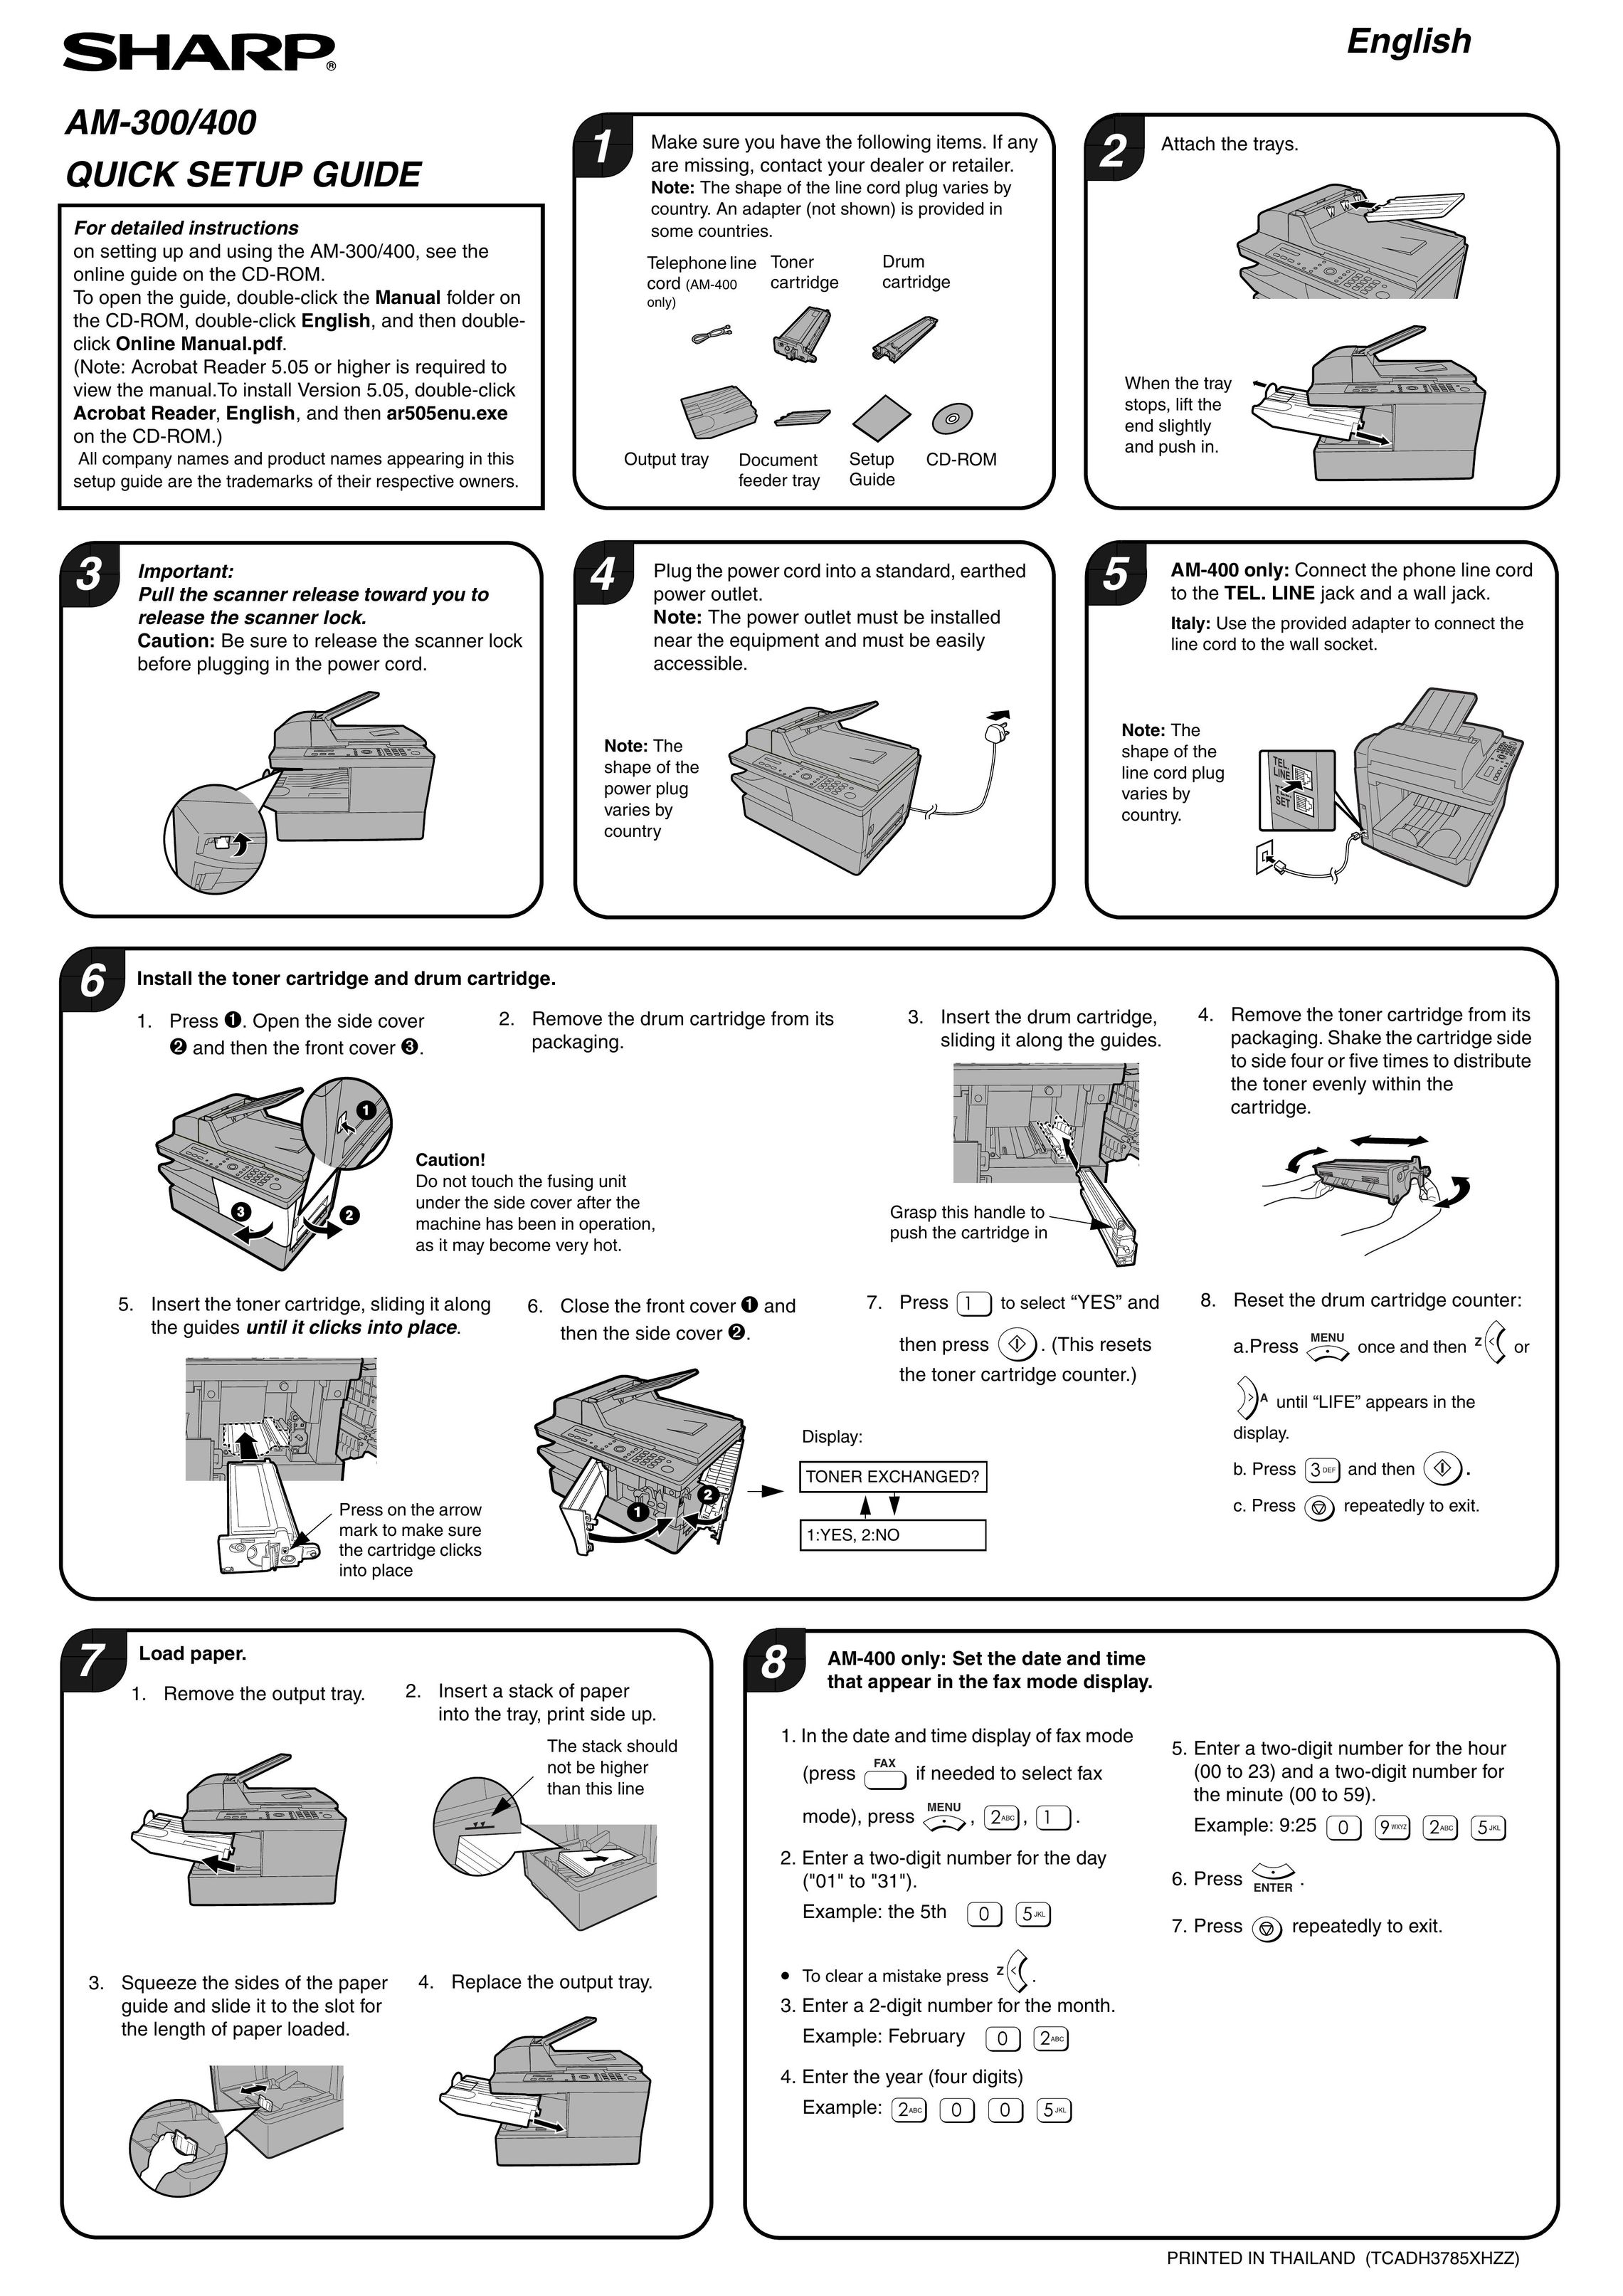 Sharp AM-400 Printer User Manual